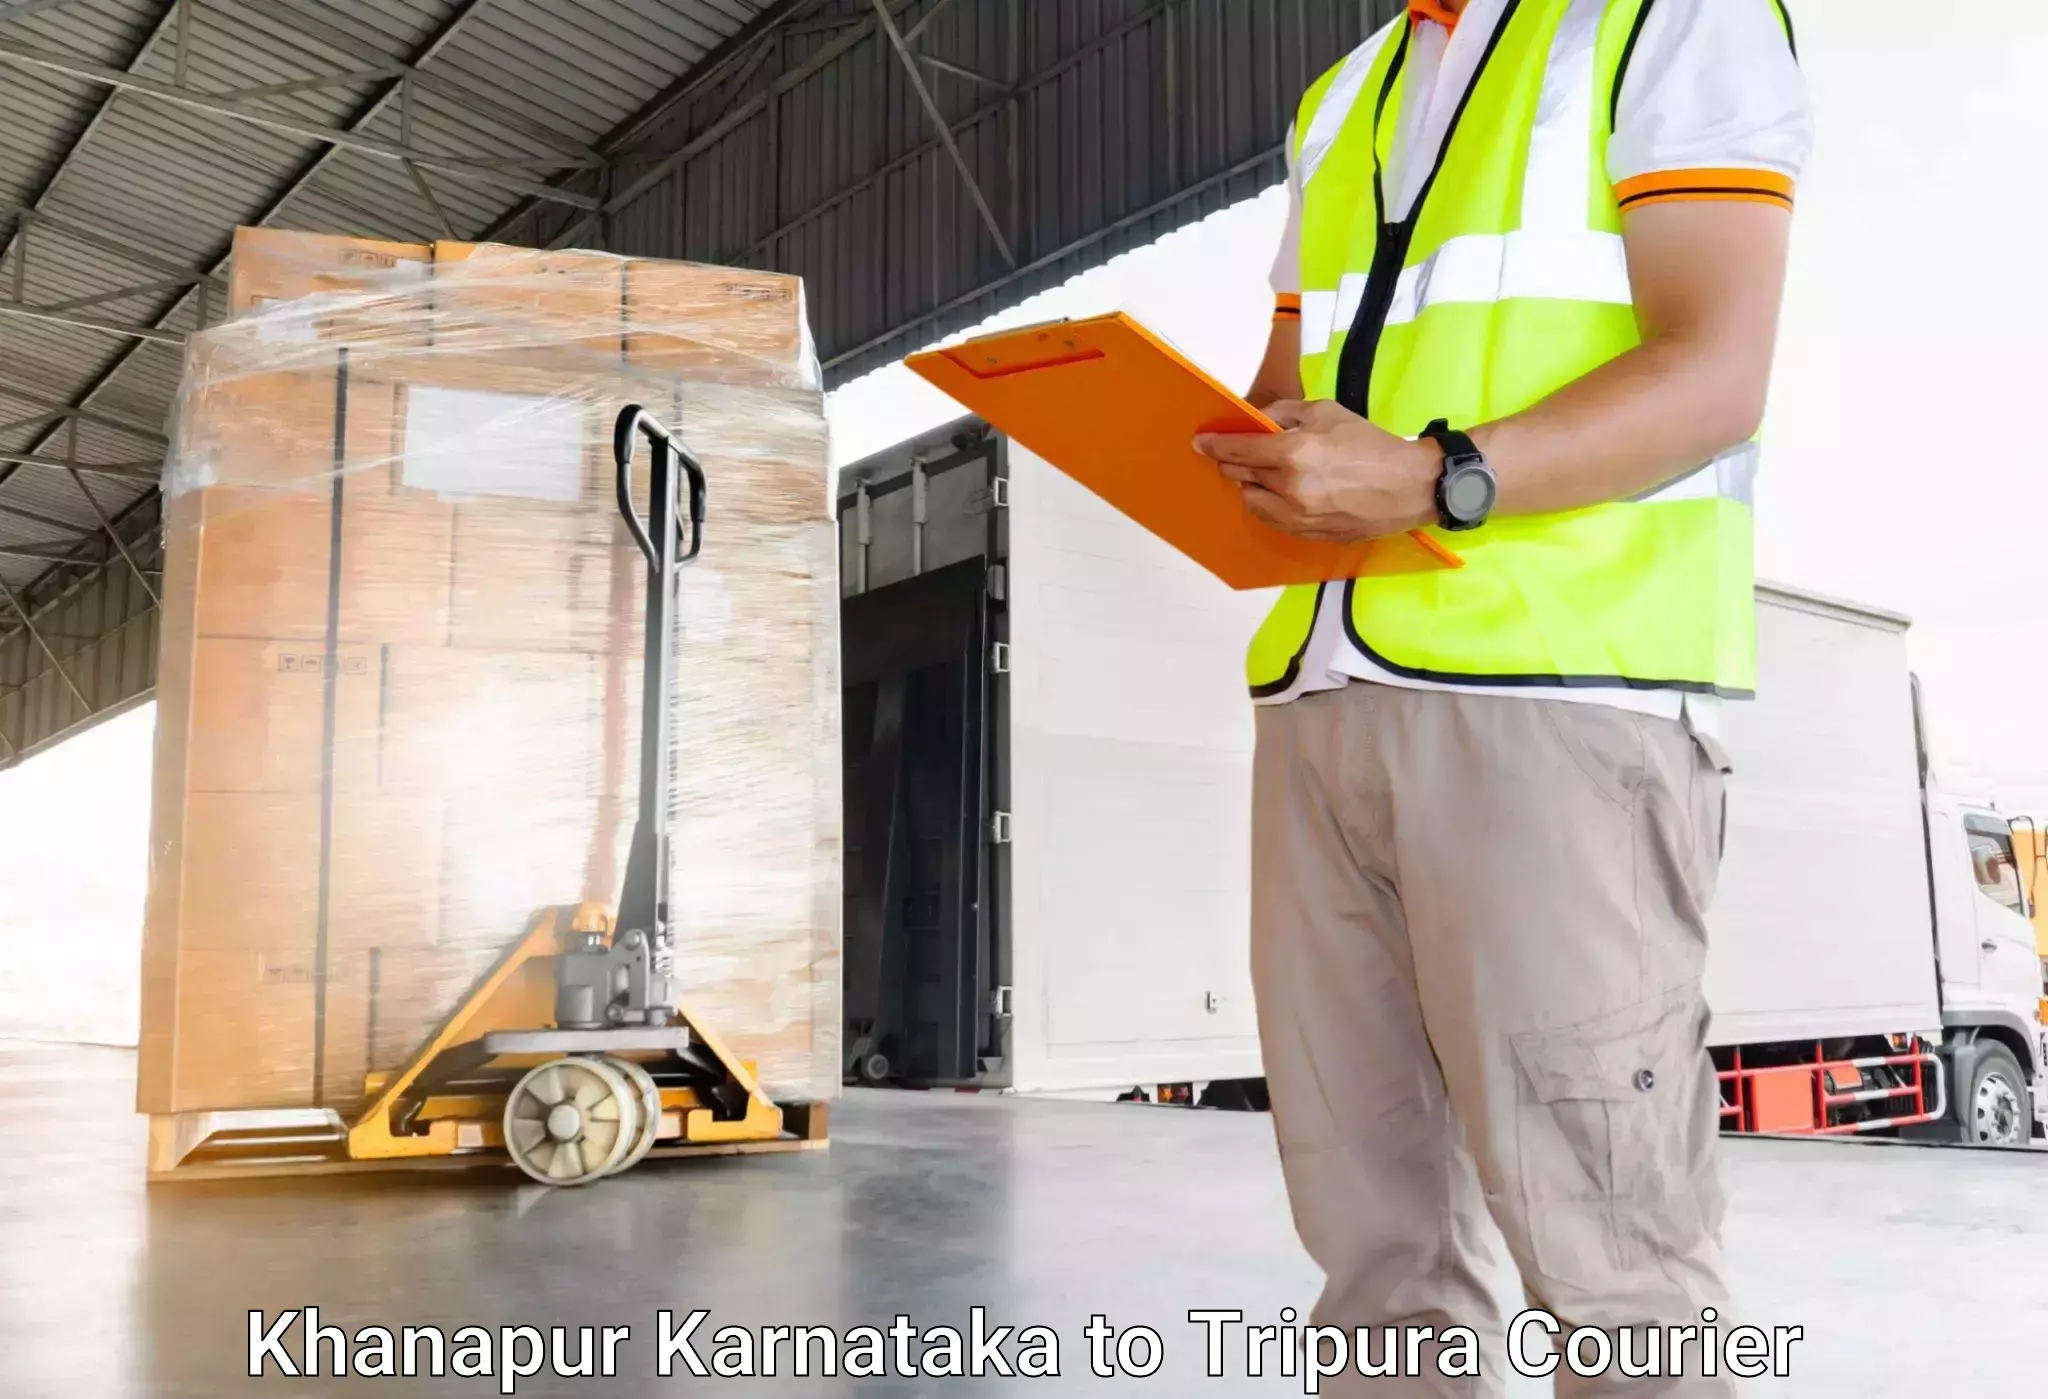 Instant baggage transport quote Khanapur Karnataka to Udaipur Tripura